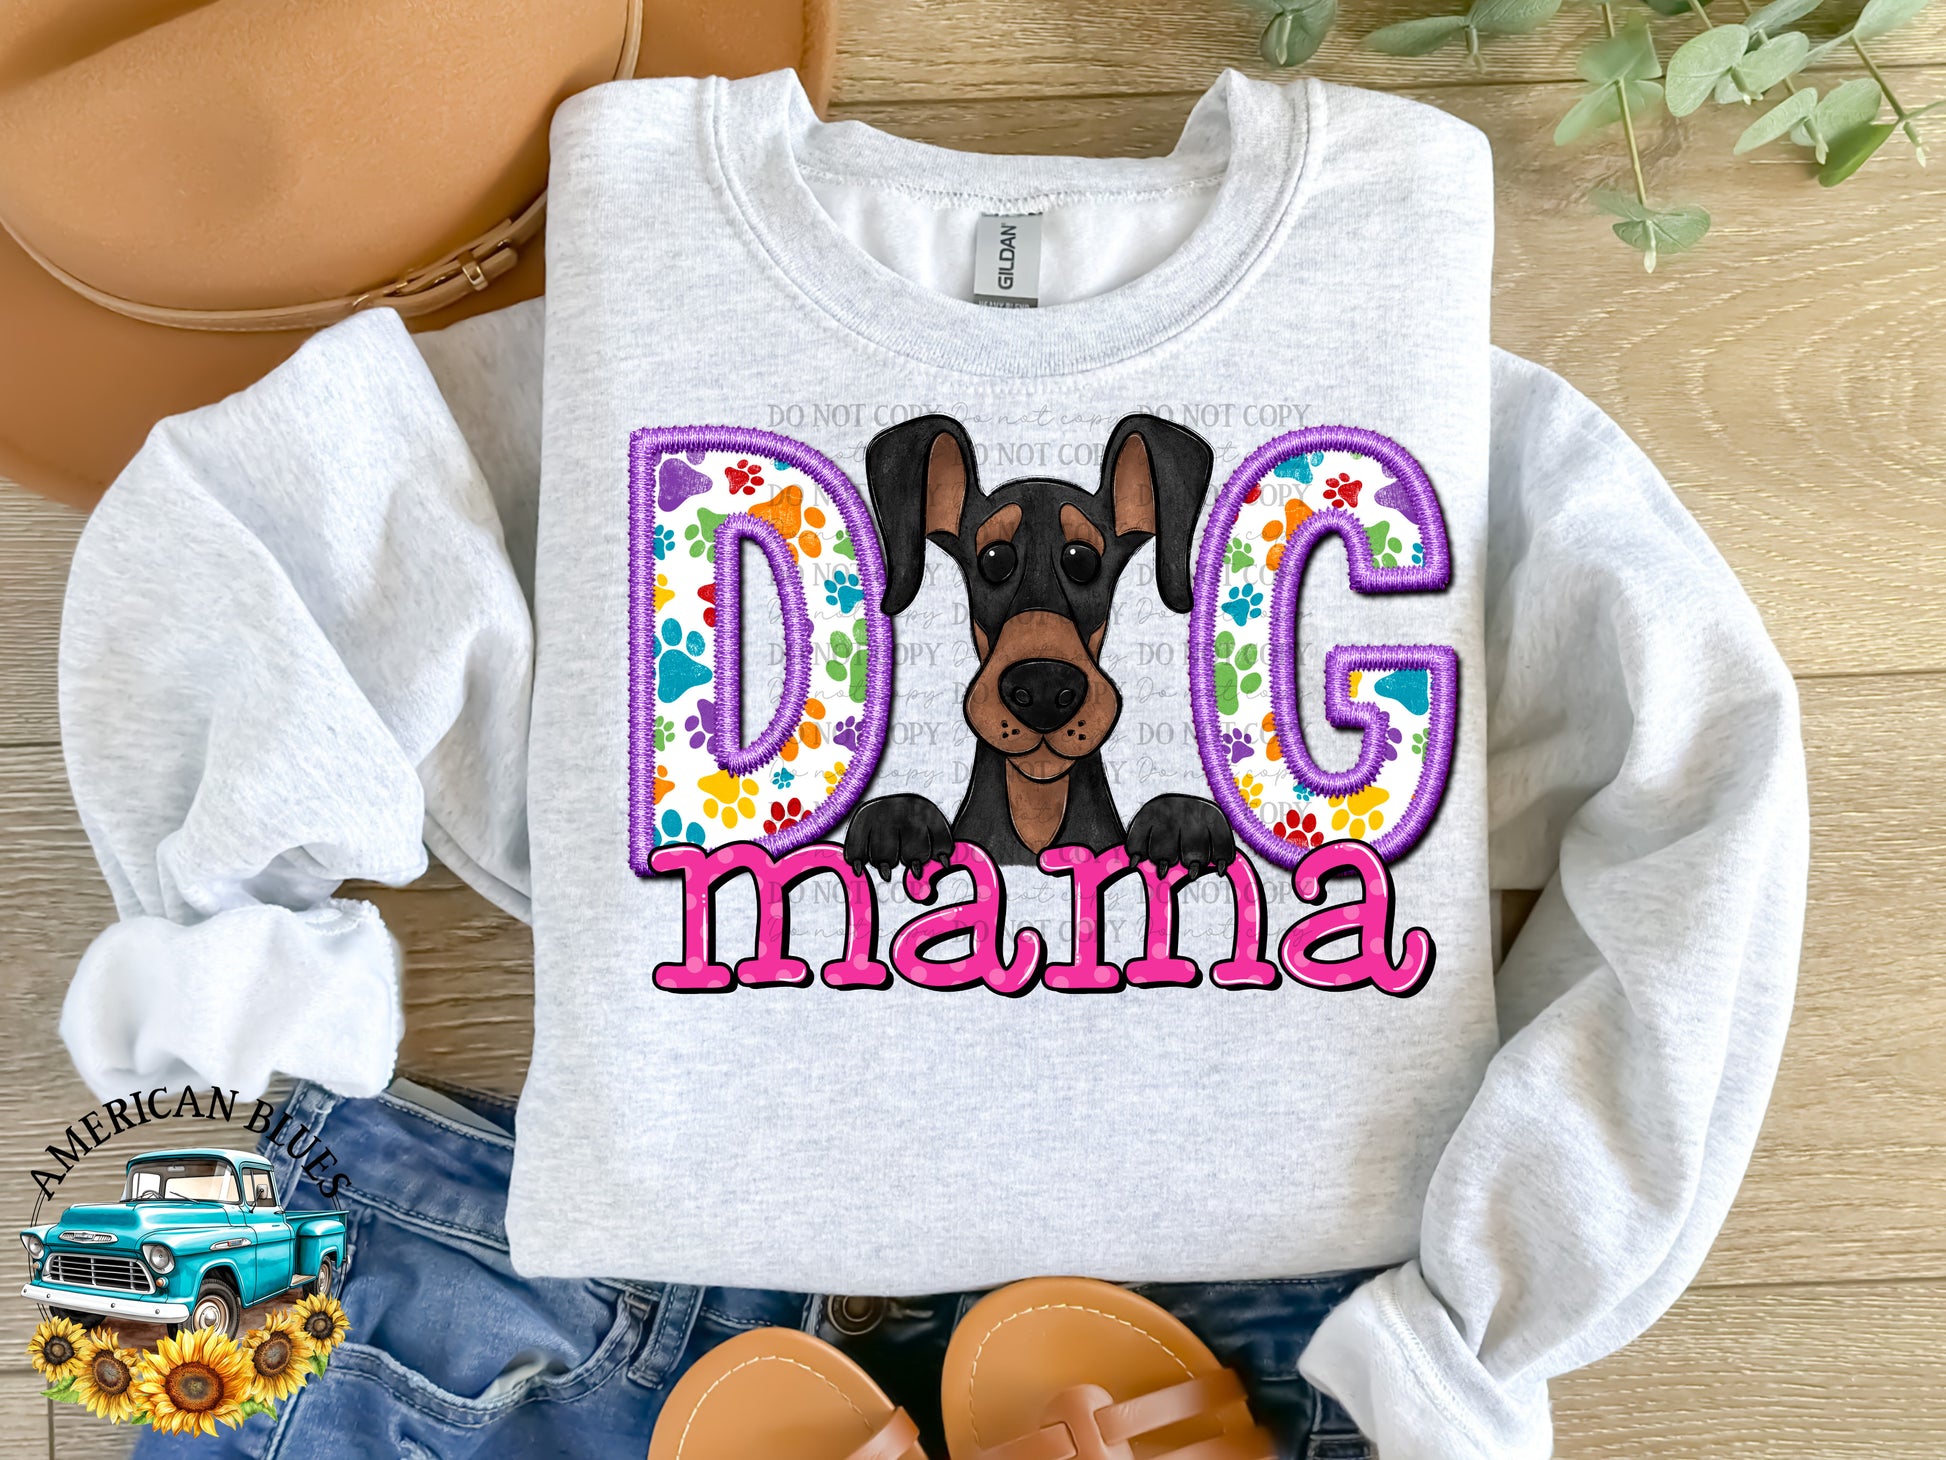  Dog mama Doberman digital design | American Blues Design